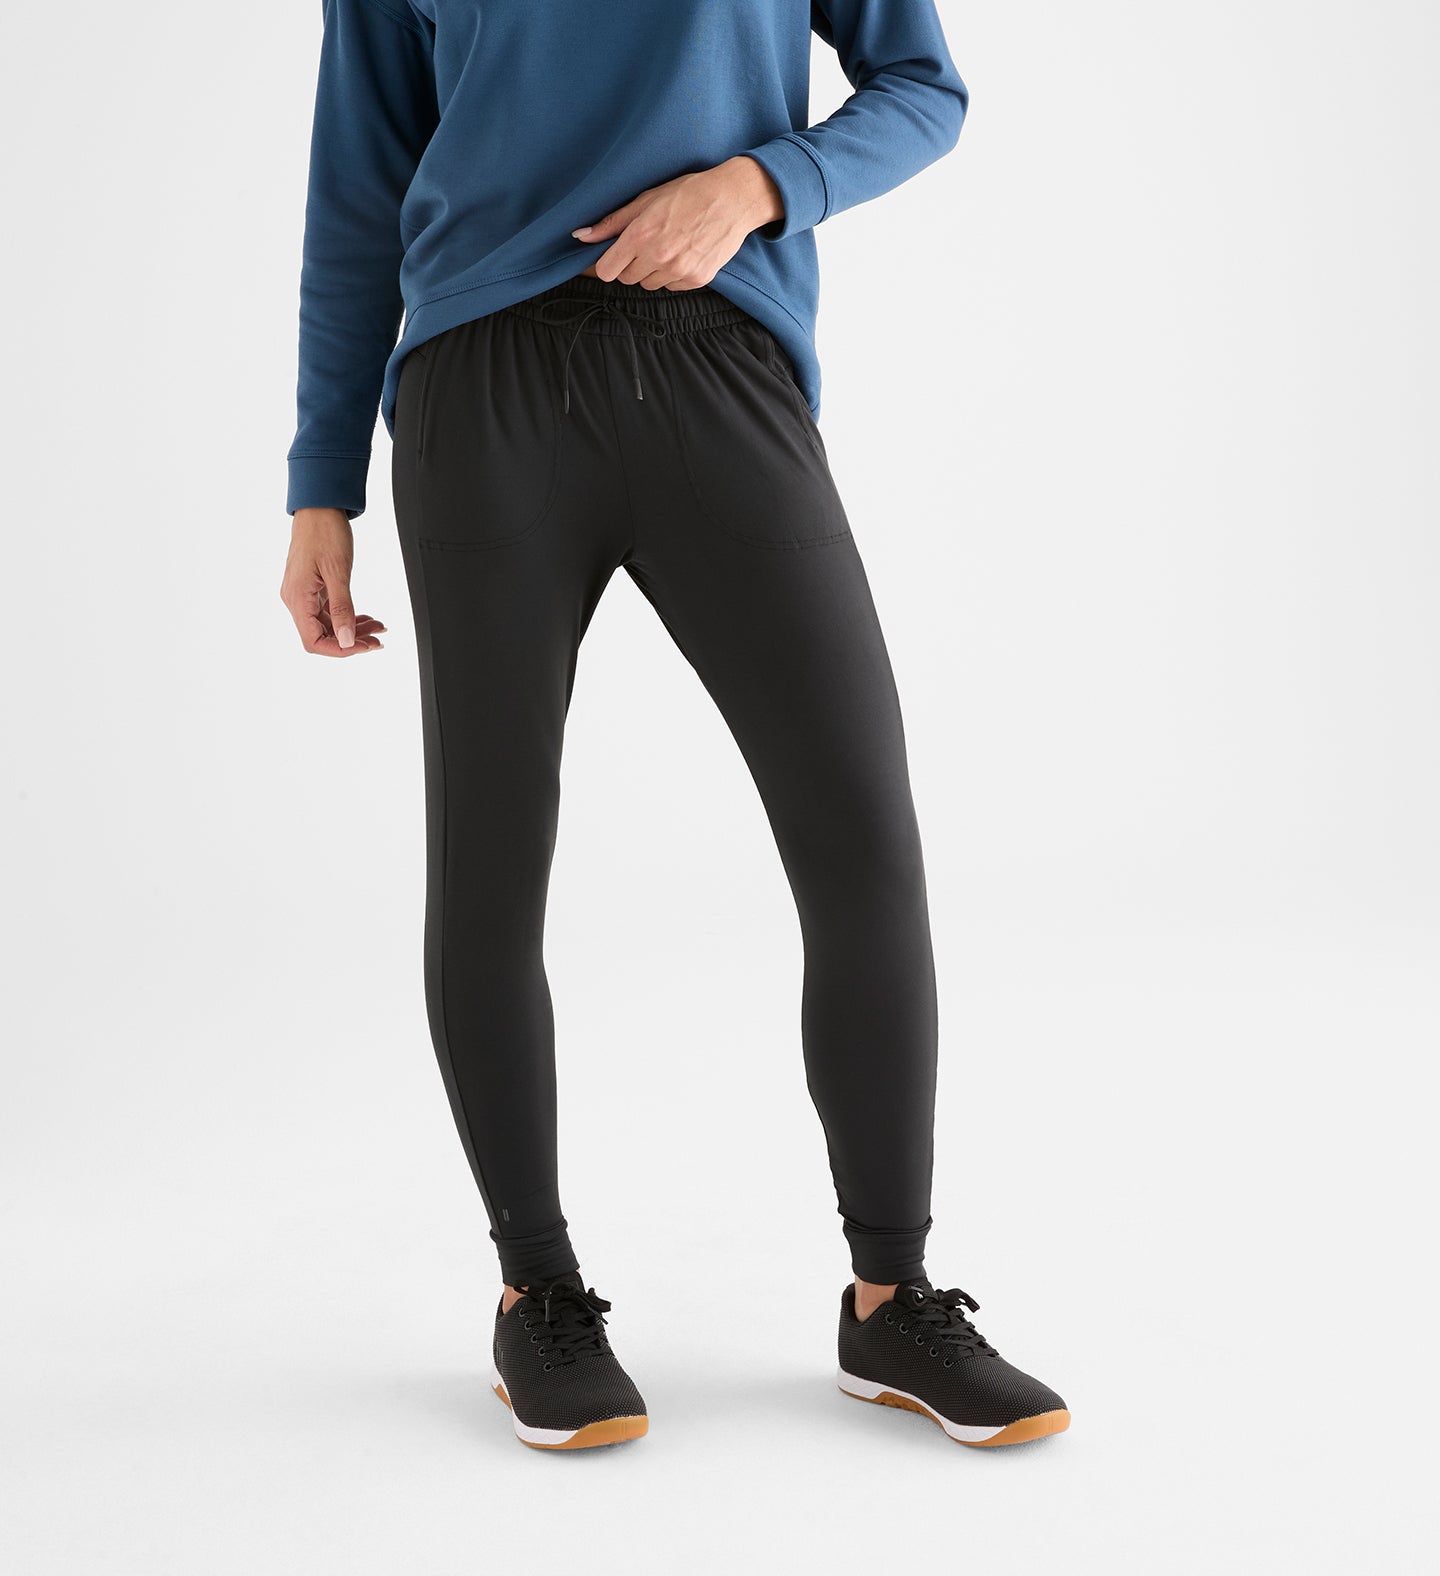 Women's Joggers & Sweatpants - Buy Online